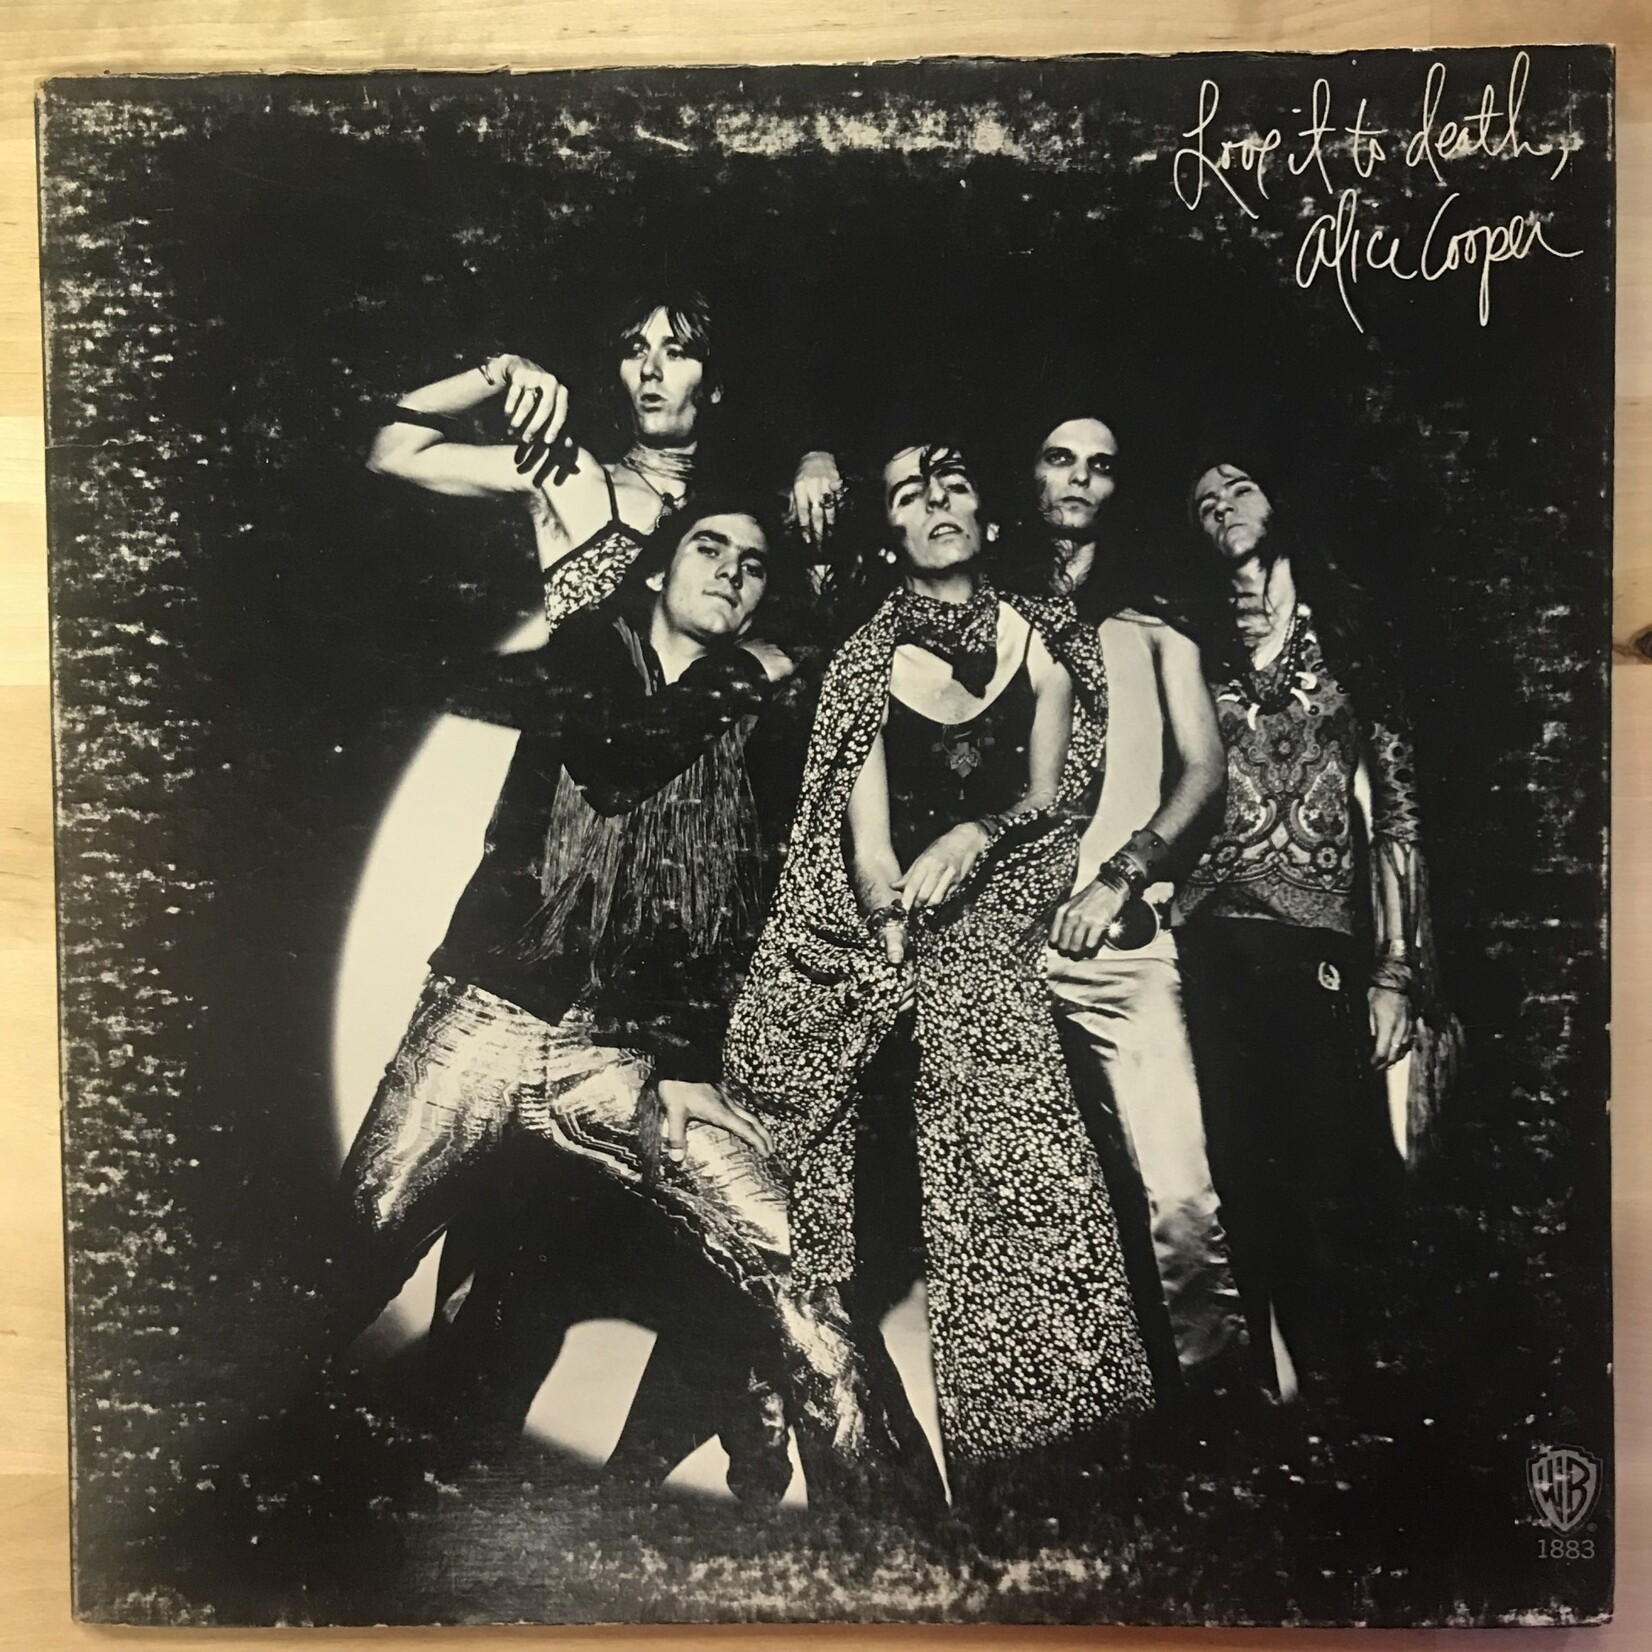 Alice Cooper - Love It To Death (Uncensored w/ Pink Label) - 1883 - Vinyl LP (USED)